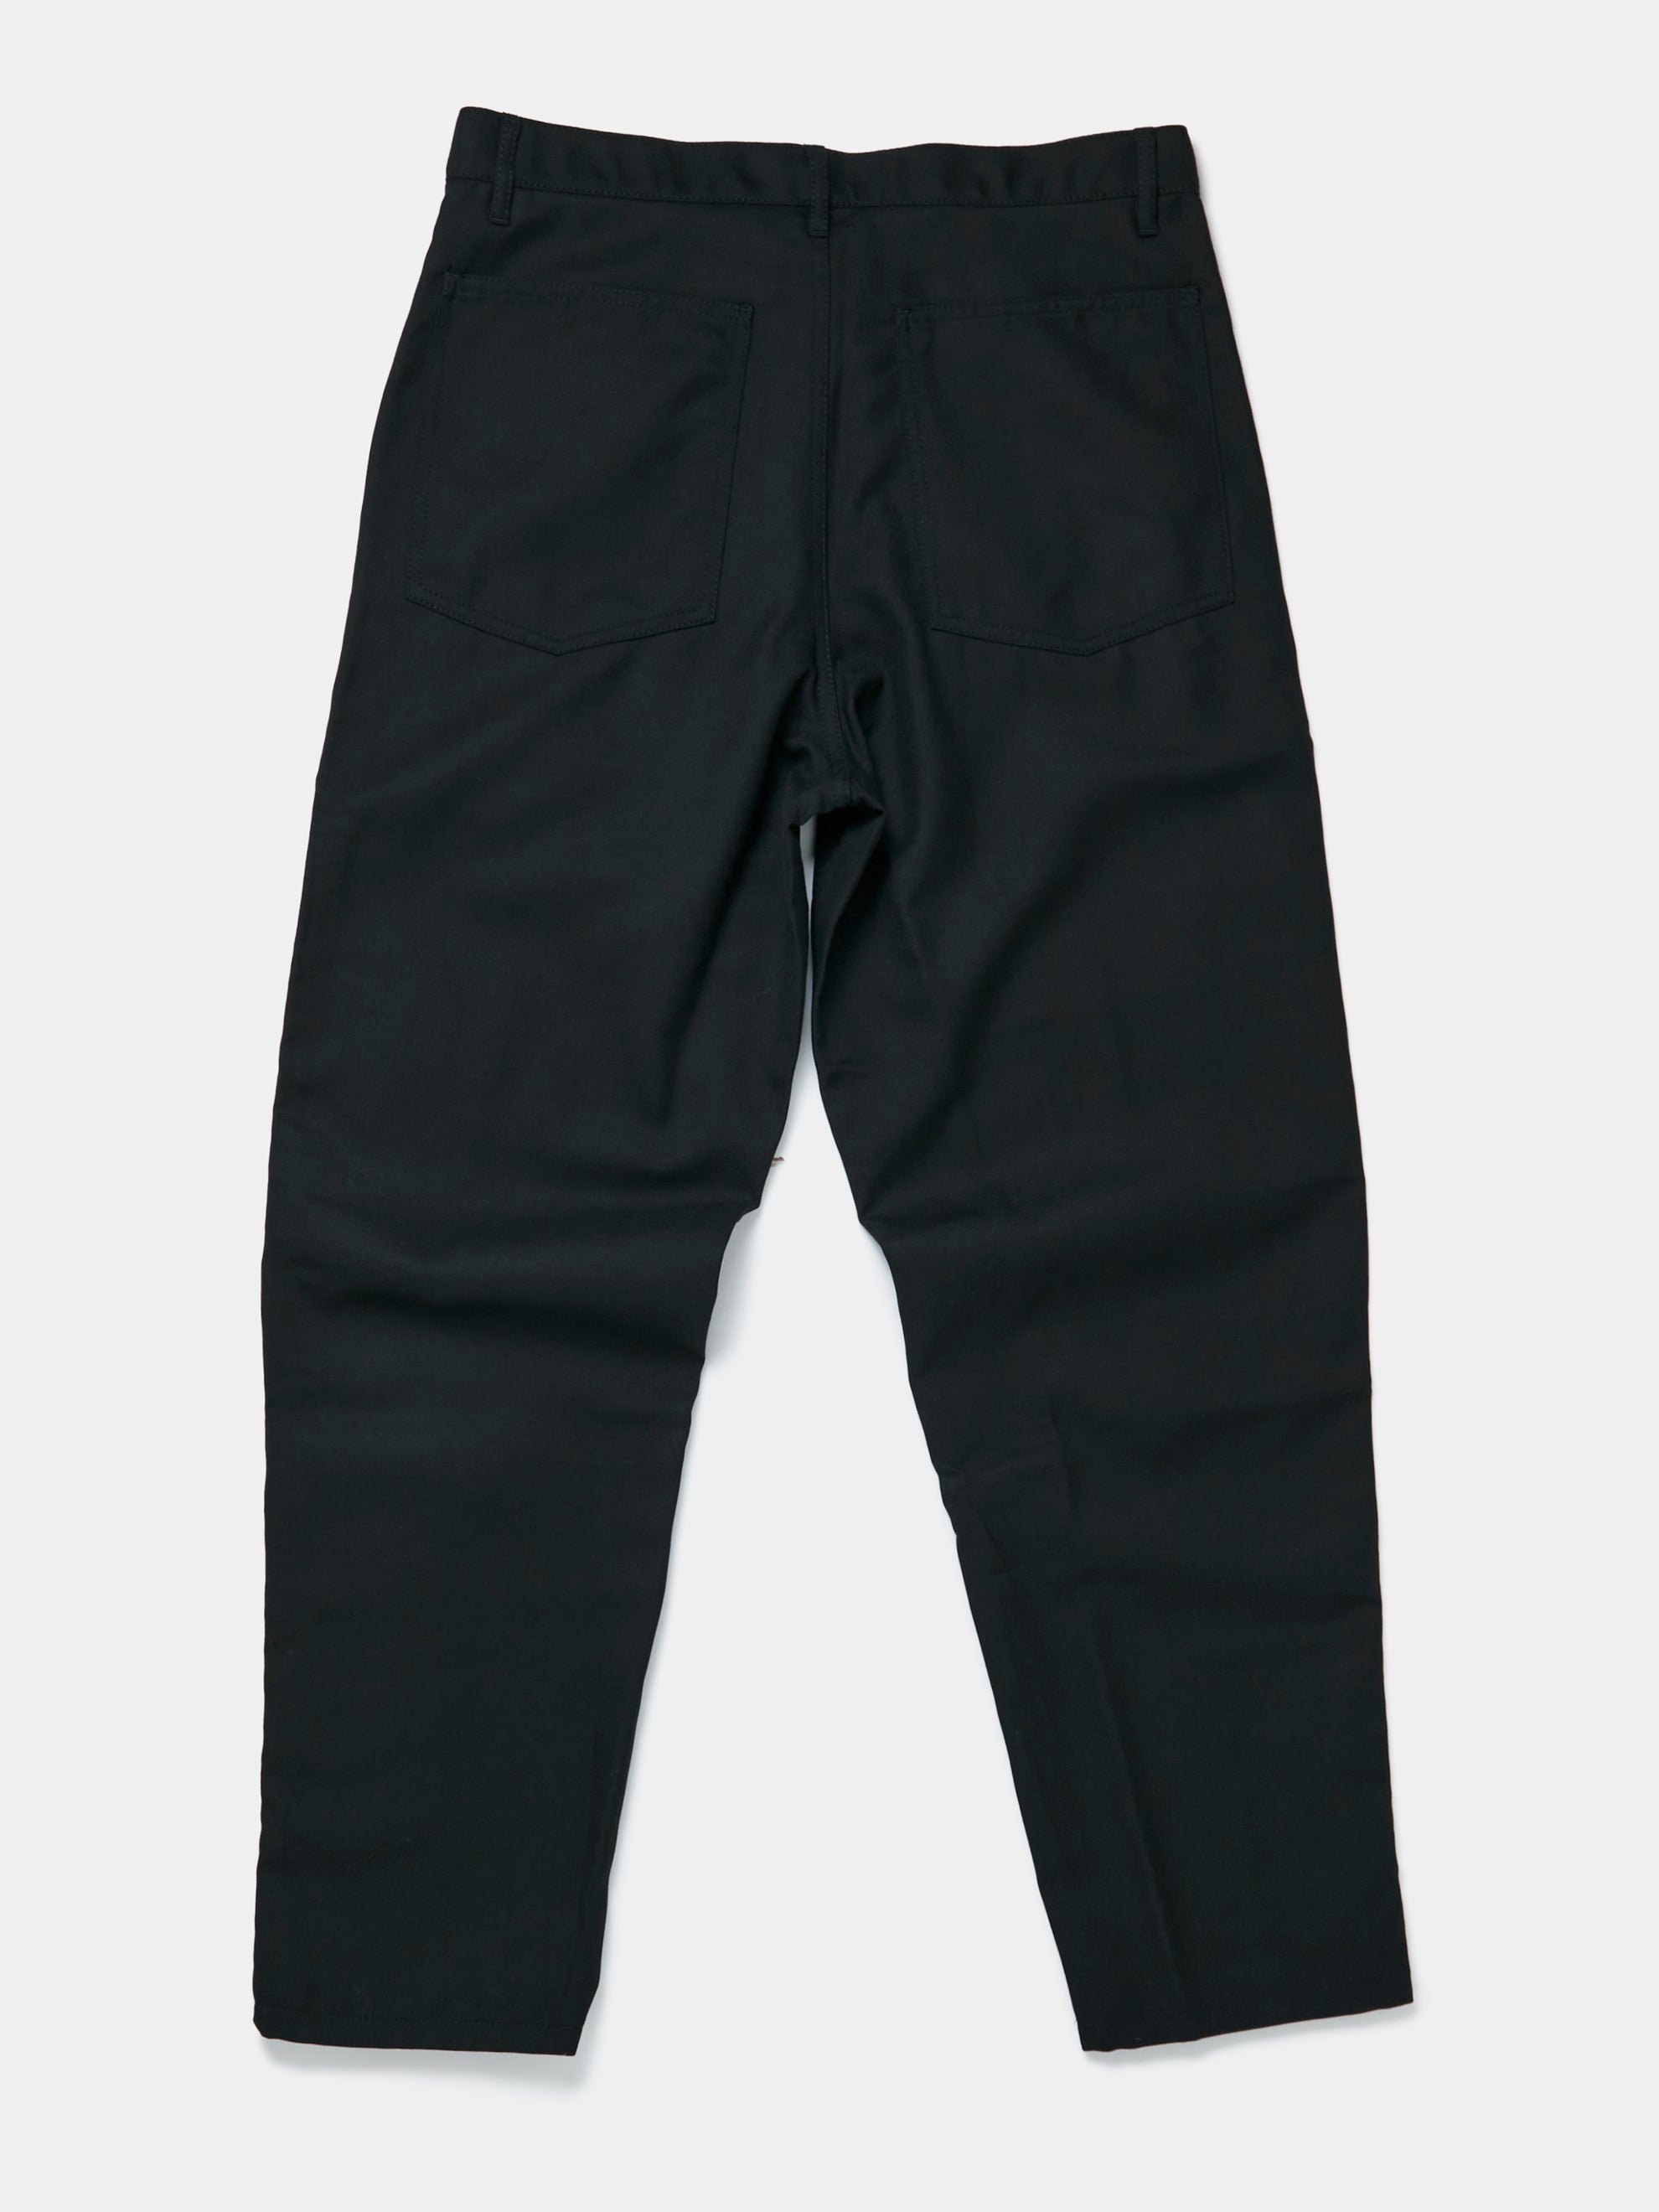 CDG Trousers (Black)